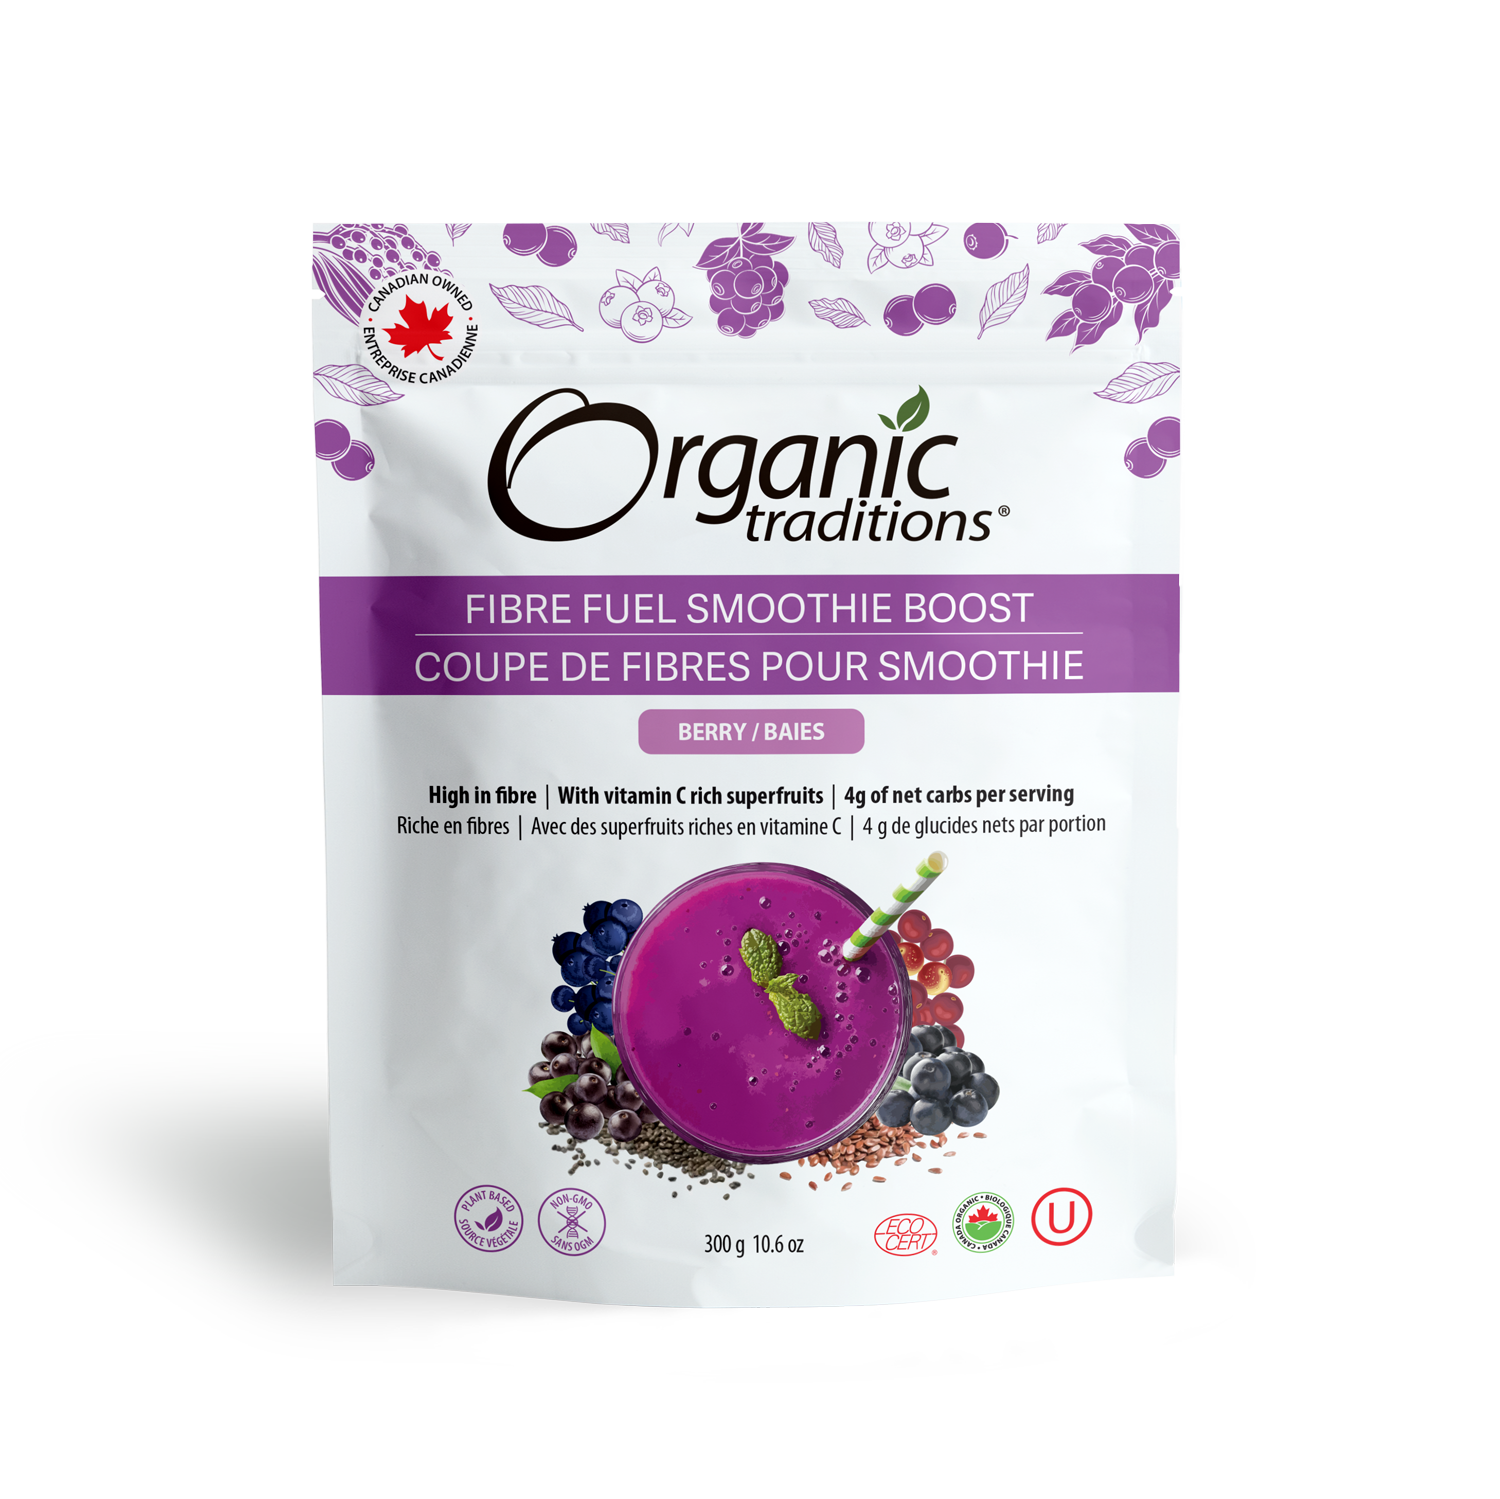 Organic Berry Fibre Fuel Smoothie Boost